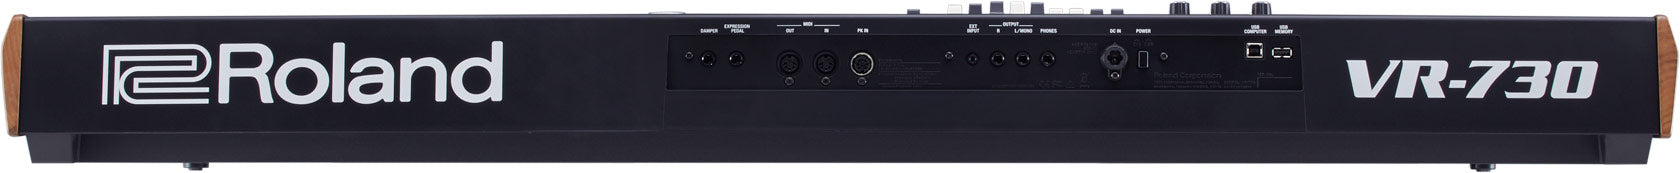 Roland VR-730 V-Combo - Demo